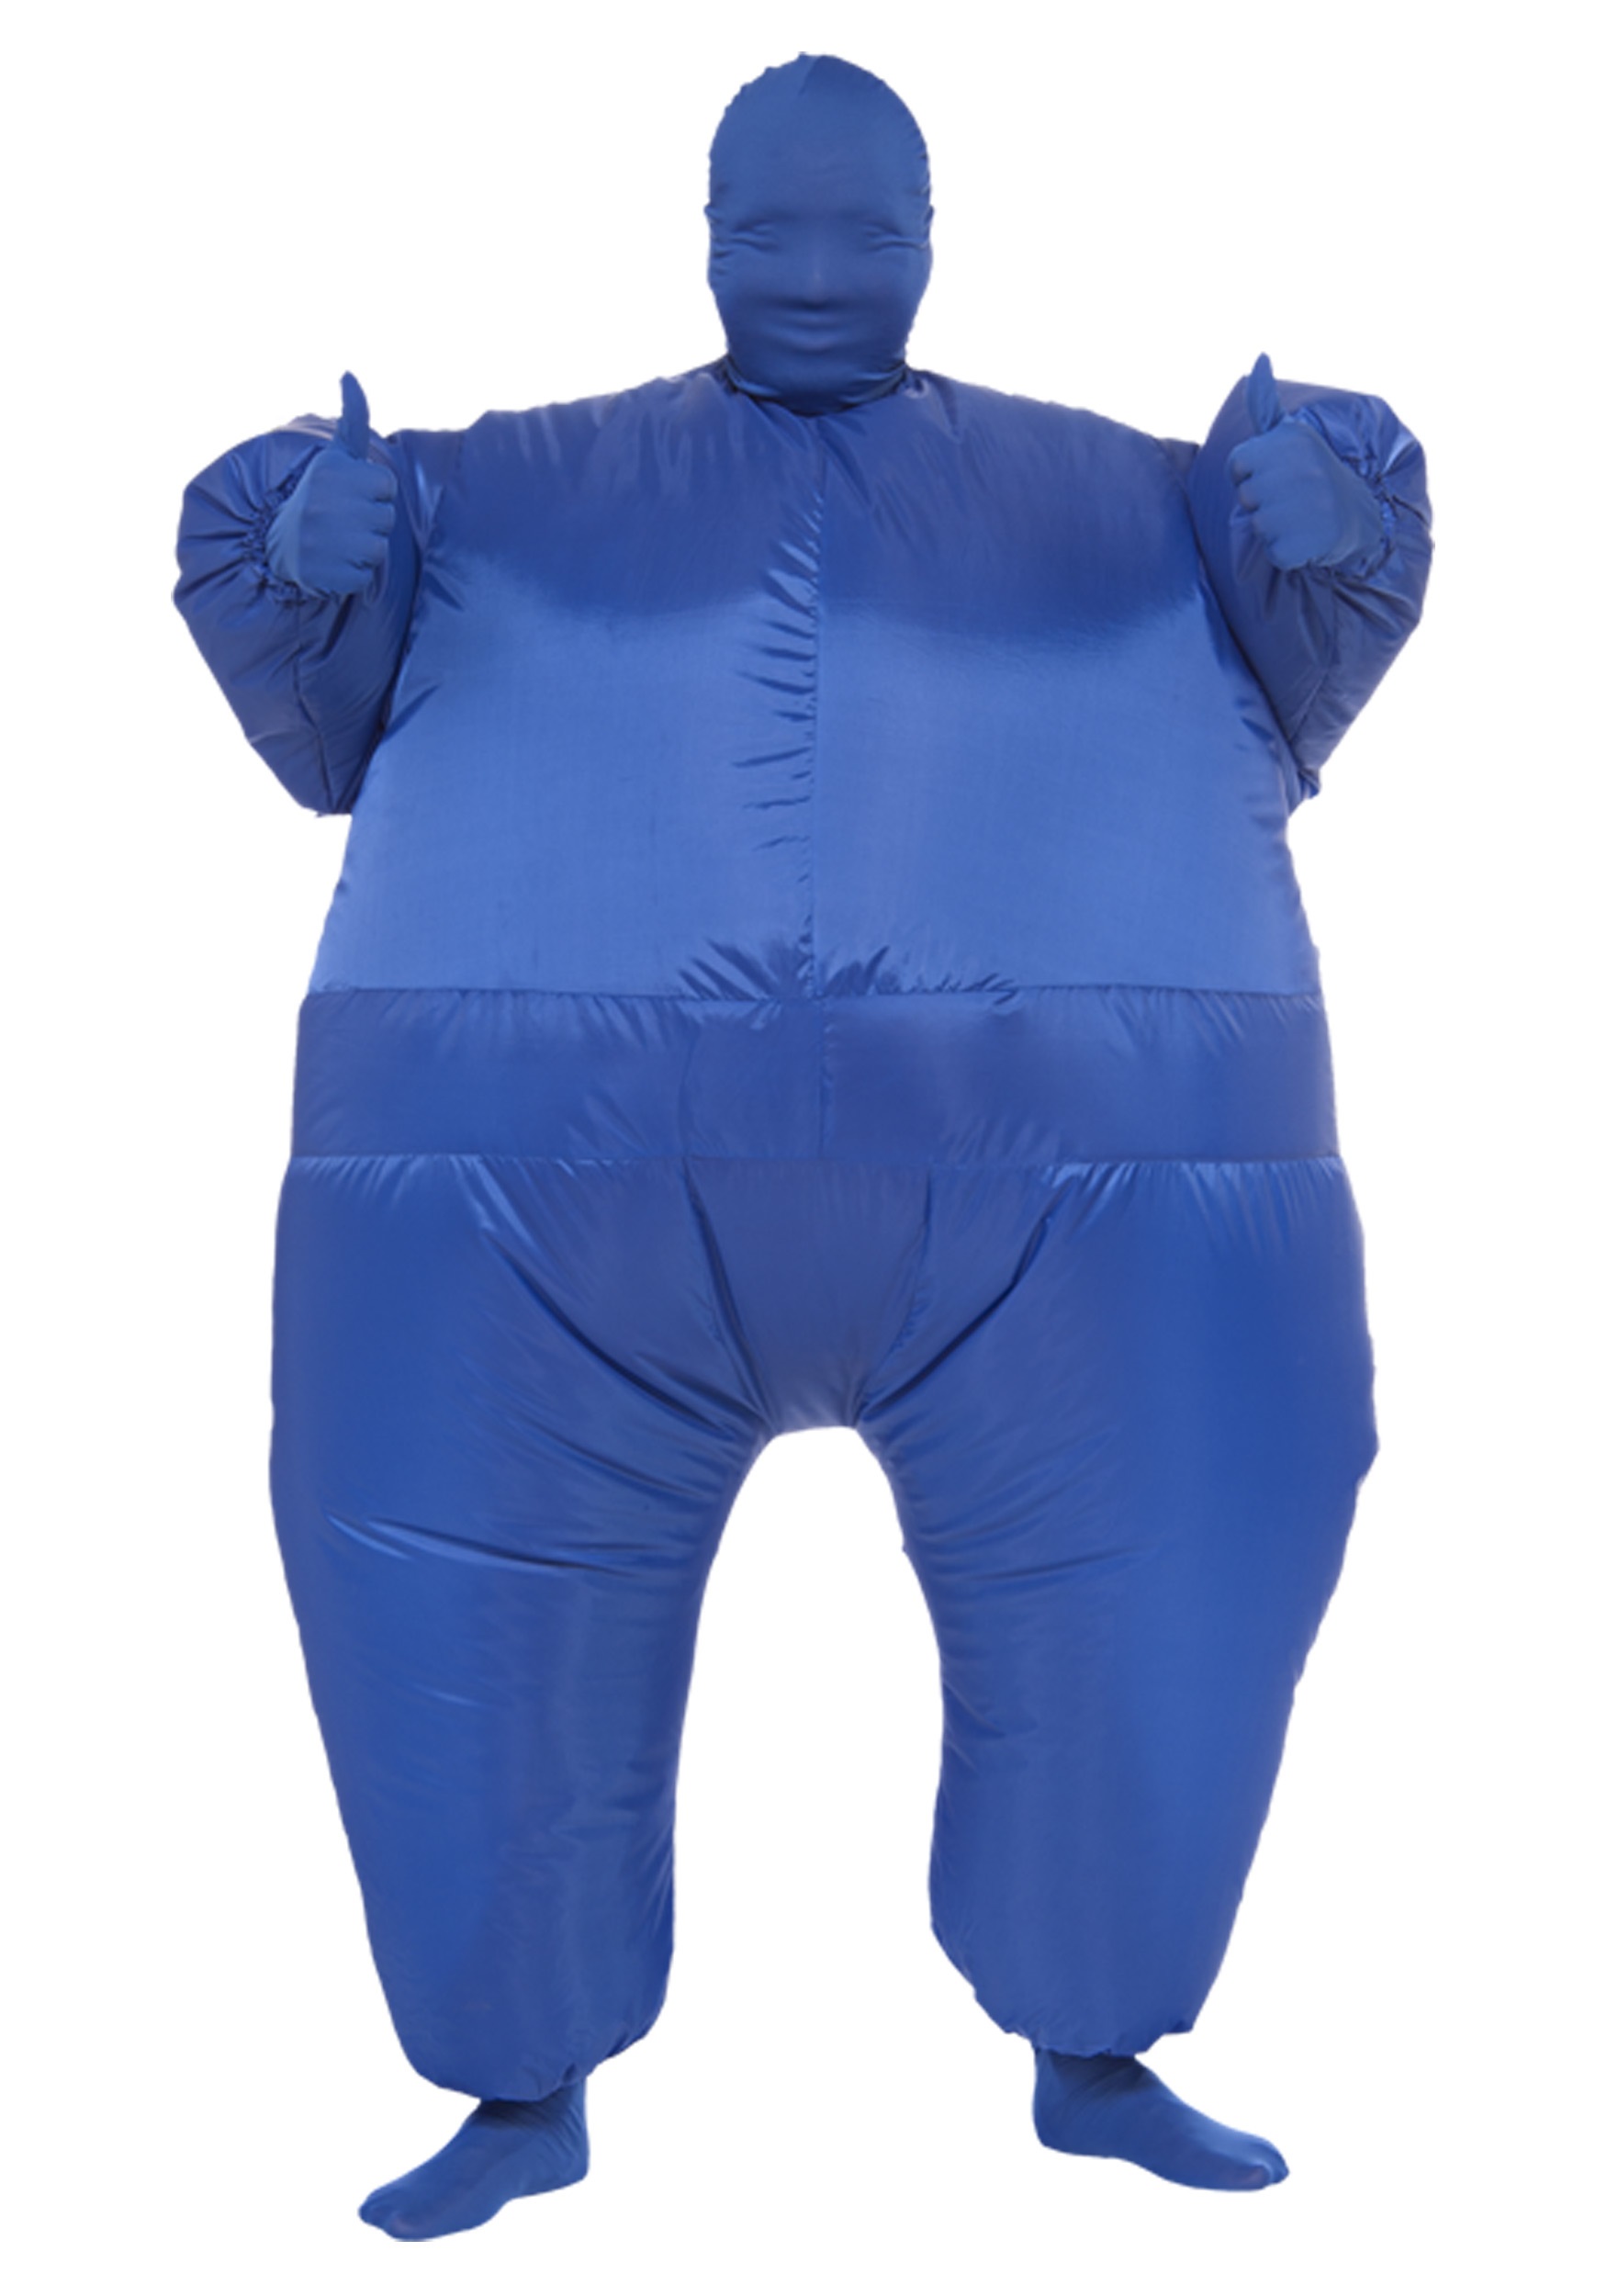 Infl8’s Blue Costume